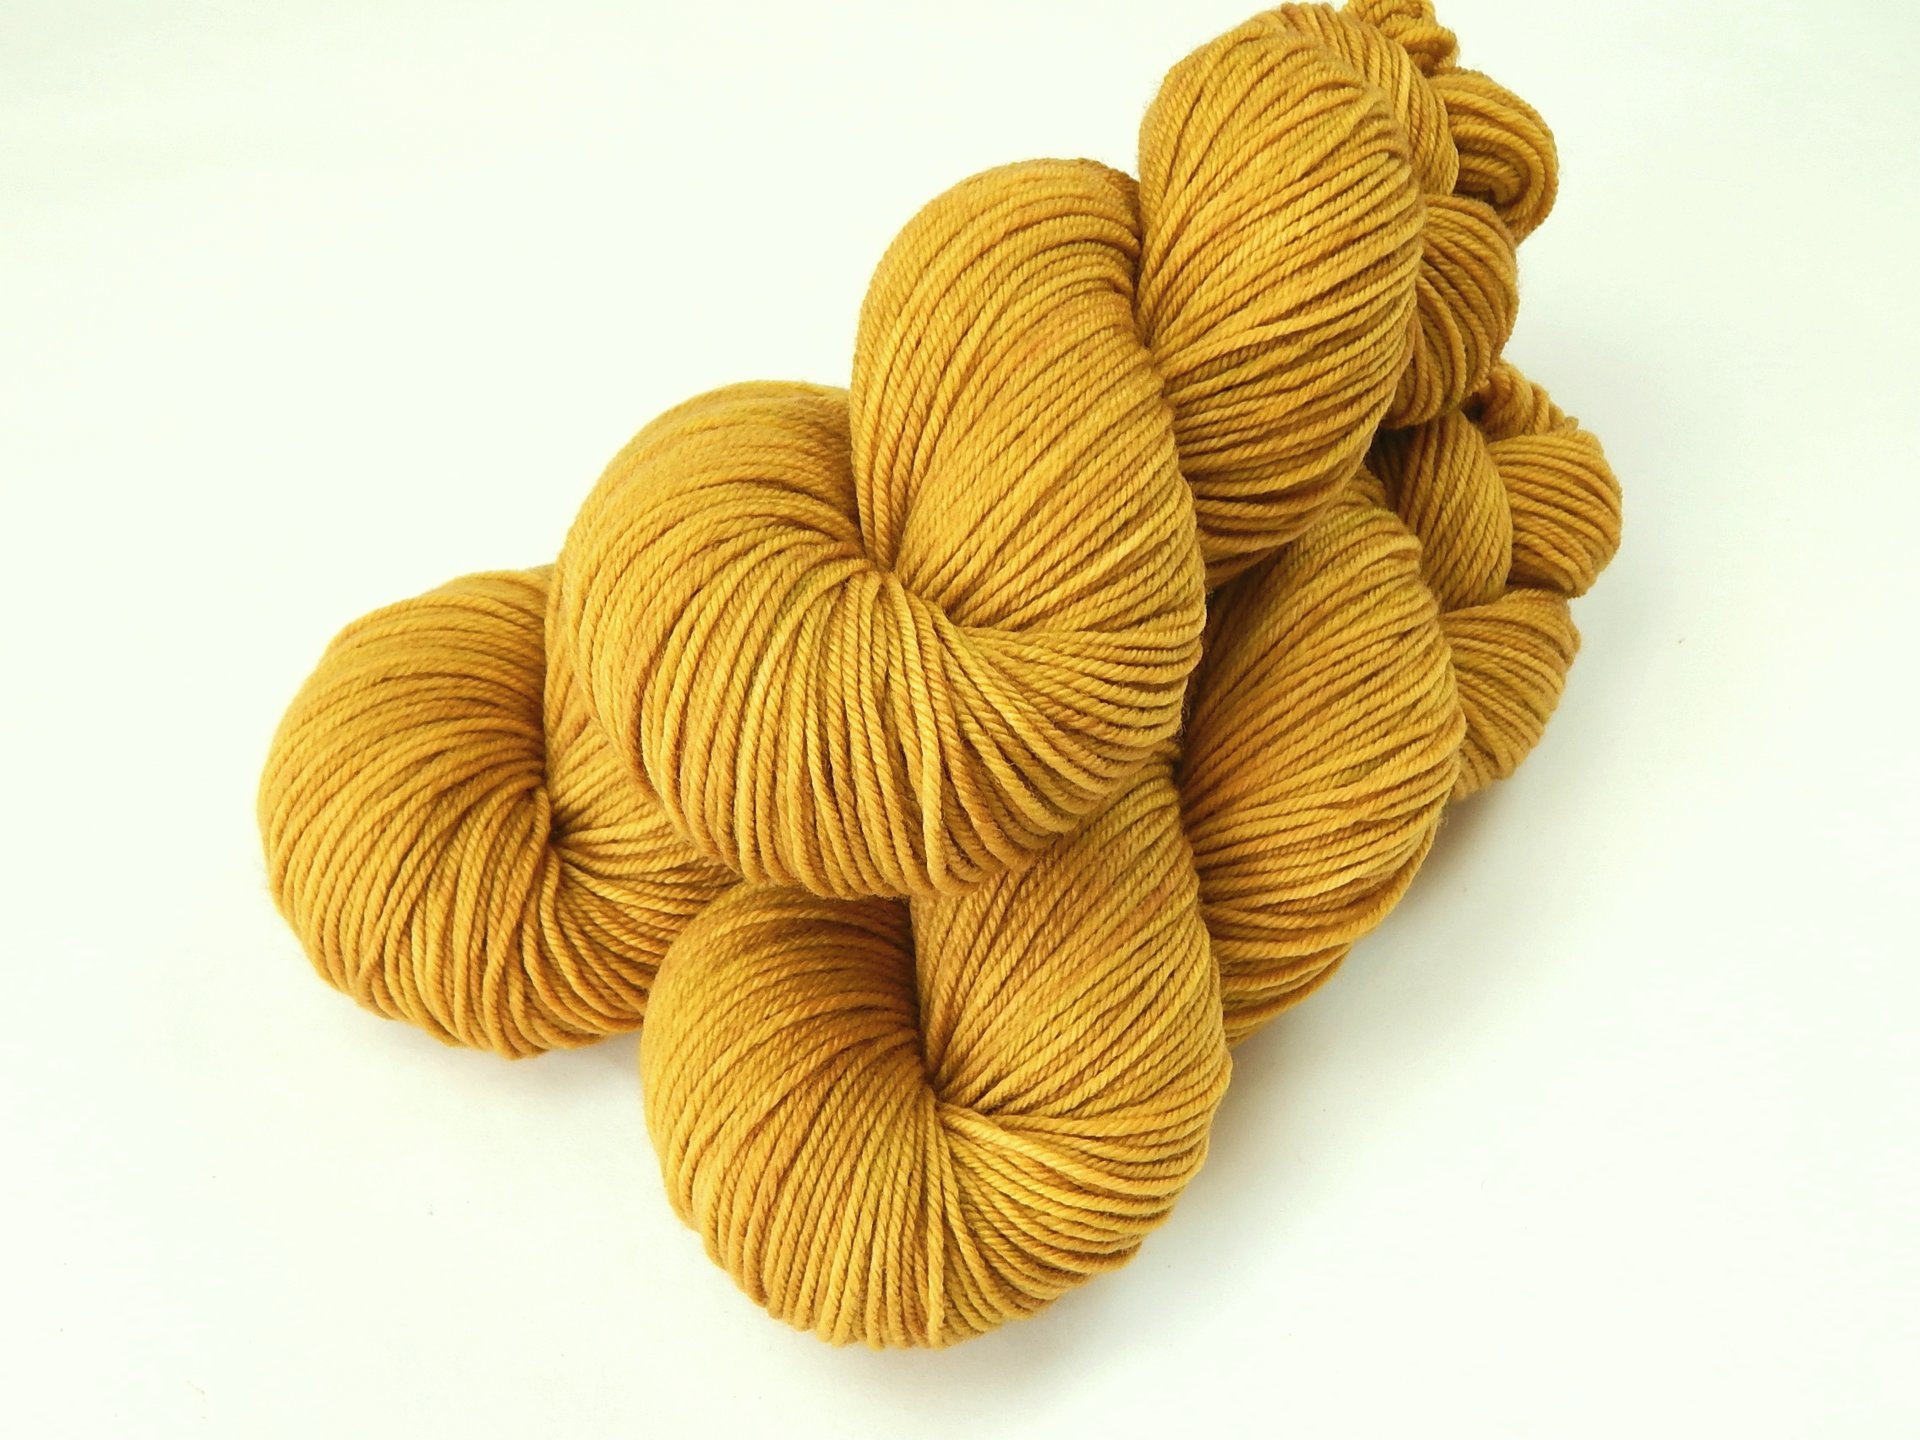 Hand Dyed Yarn, DK Weight Superwash Merino Wool - Honey Mustard - Soft Tonal Yellow Gold Indie Dyer Yarn, Wool Yarn for Knitting Crochet